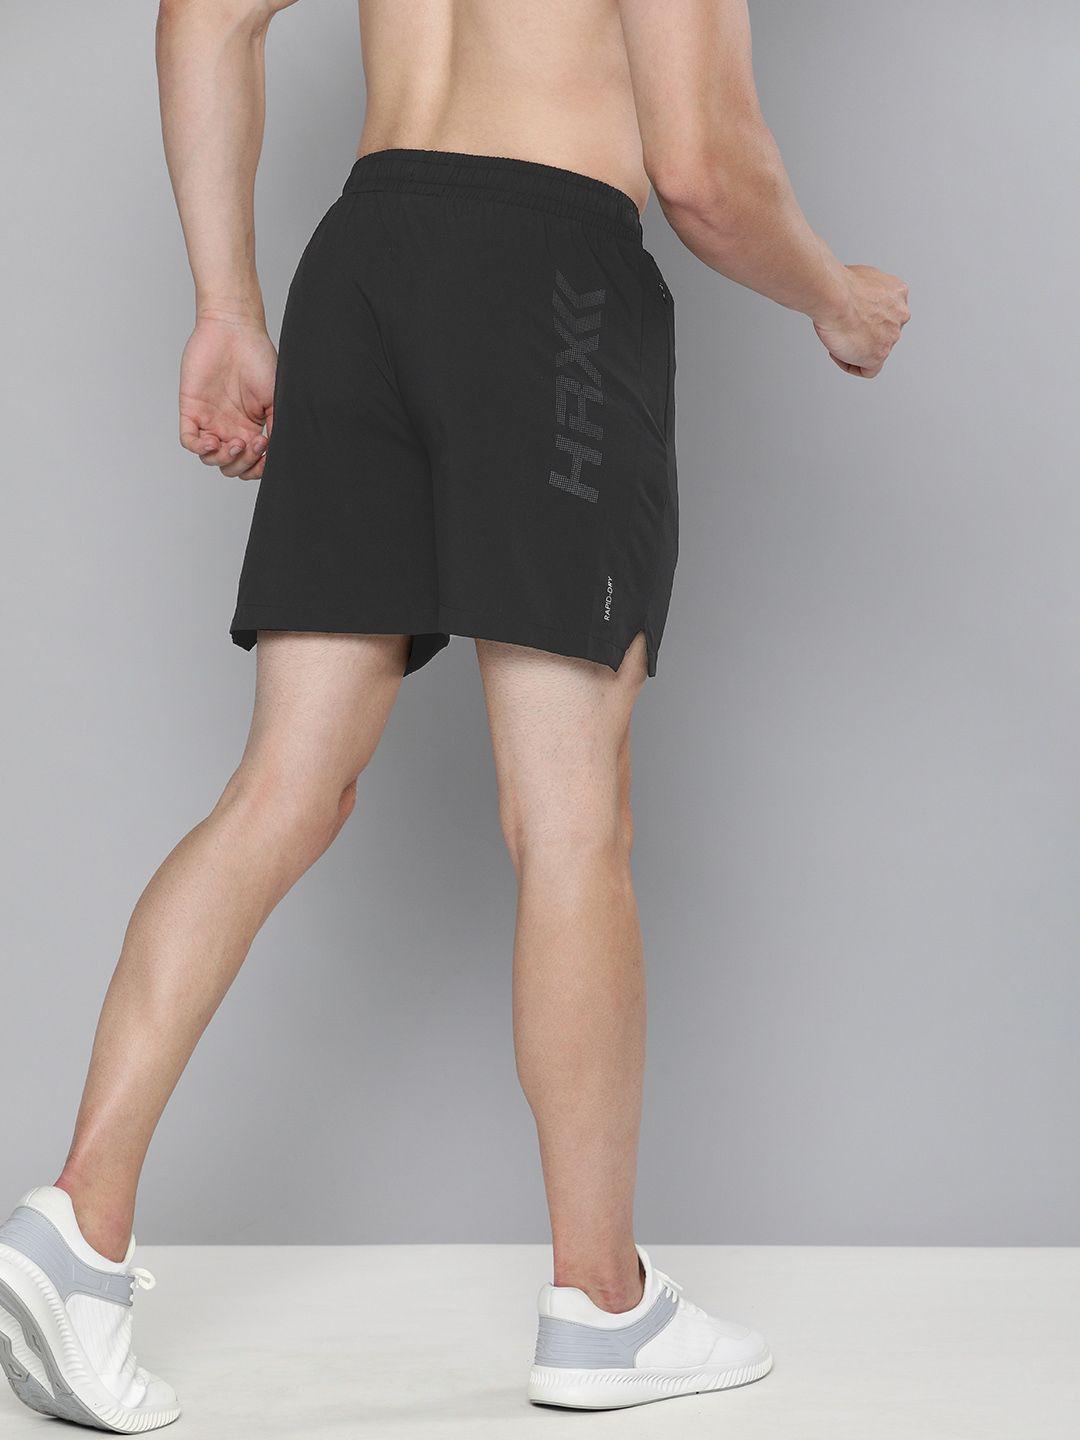 hrx-by-hrithik-roshan-men-jet-black-solid-regular-fit-rapid-dry-antimicrobial-running-shorts